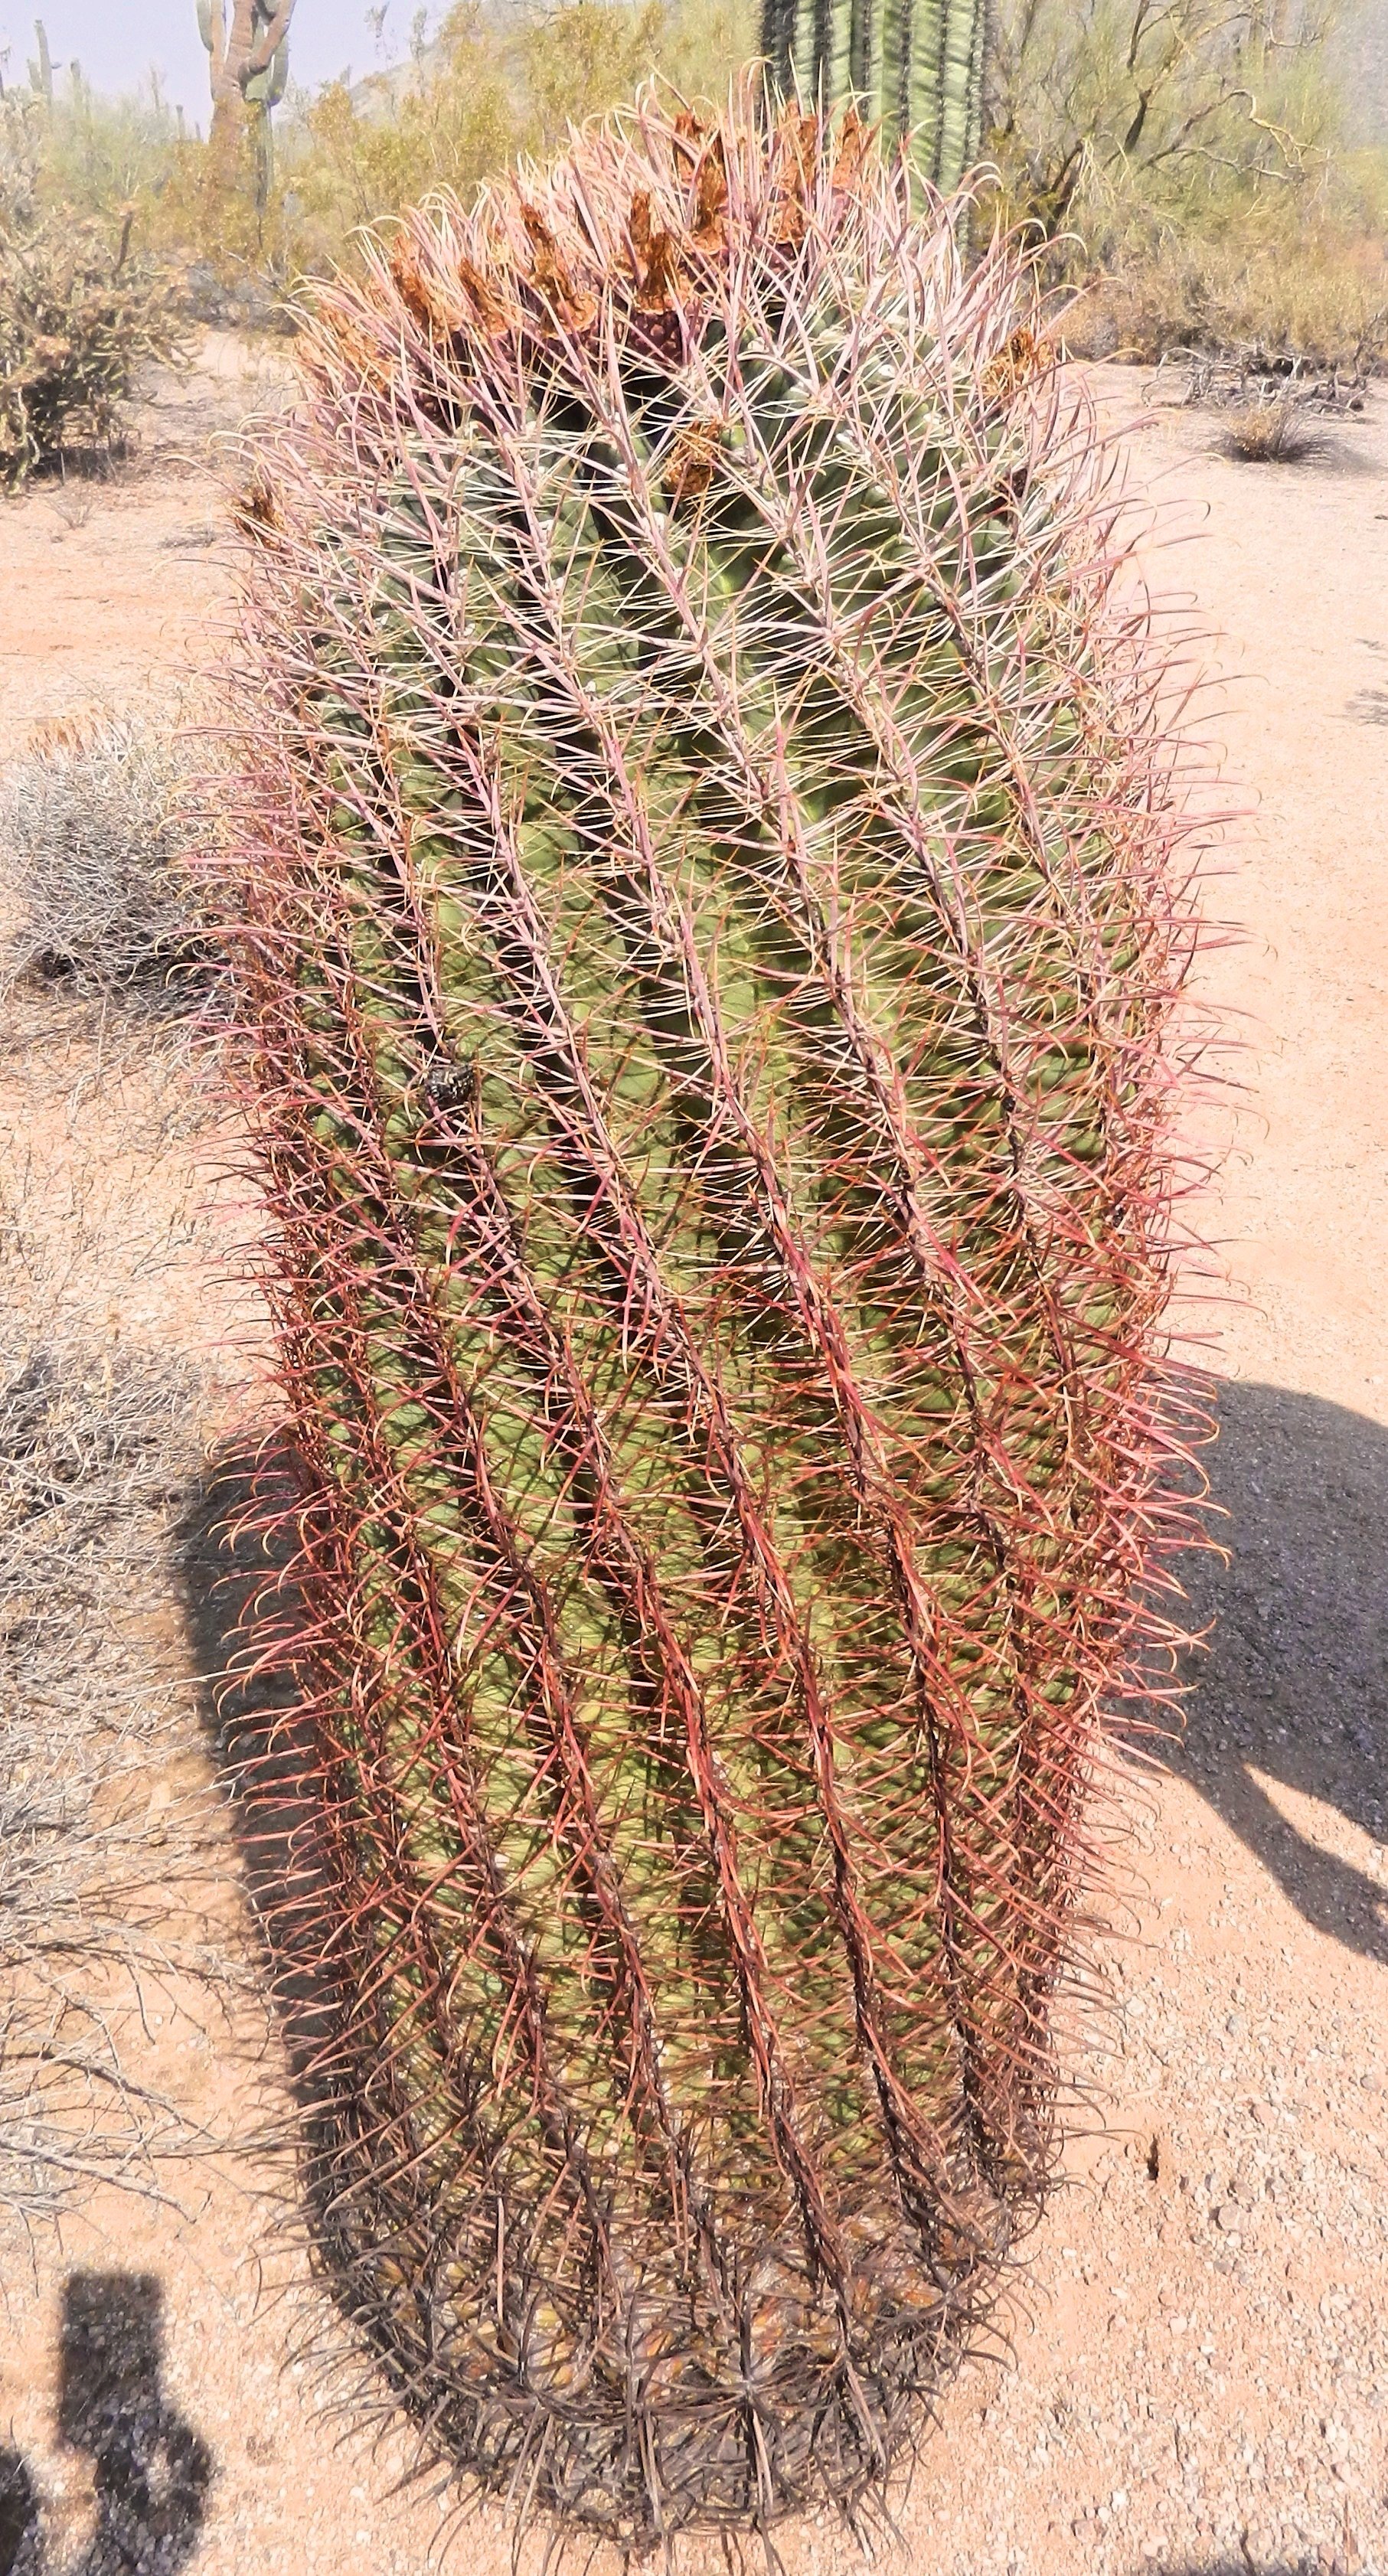 Large cactus in the Sonoran Desert, Arizona.jpg